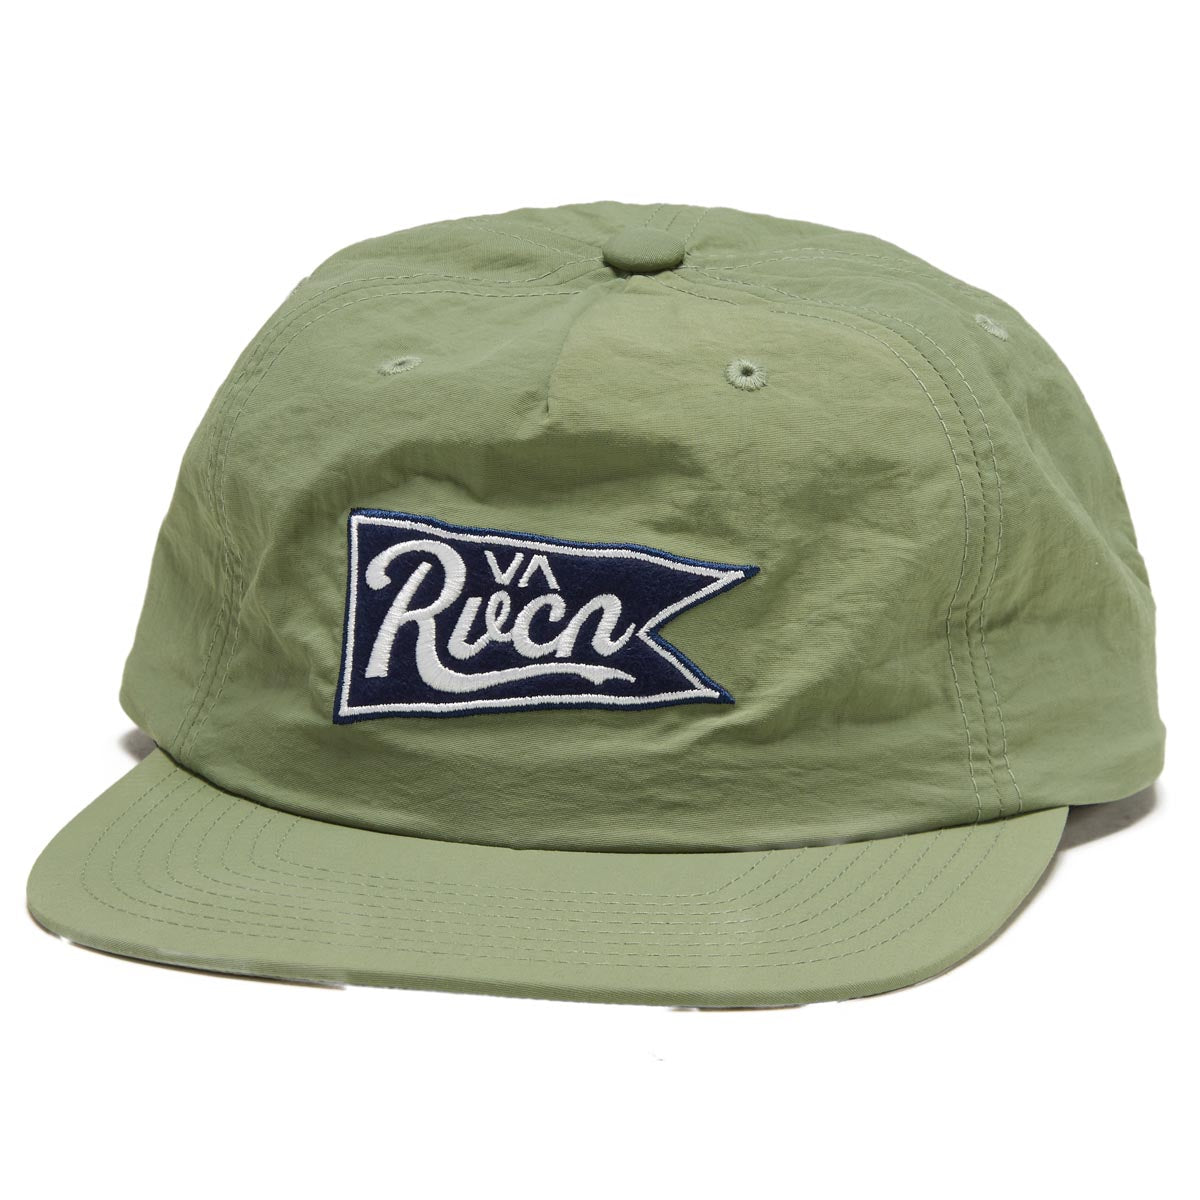 RVCA Pennant Snapback Hat - Olive image 1